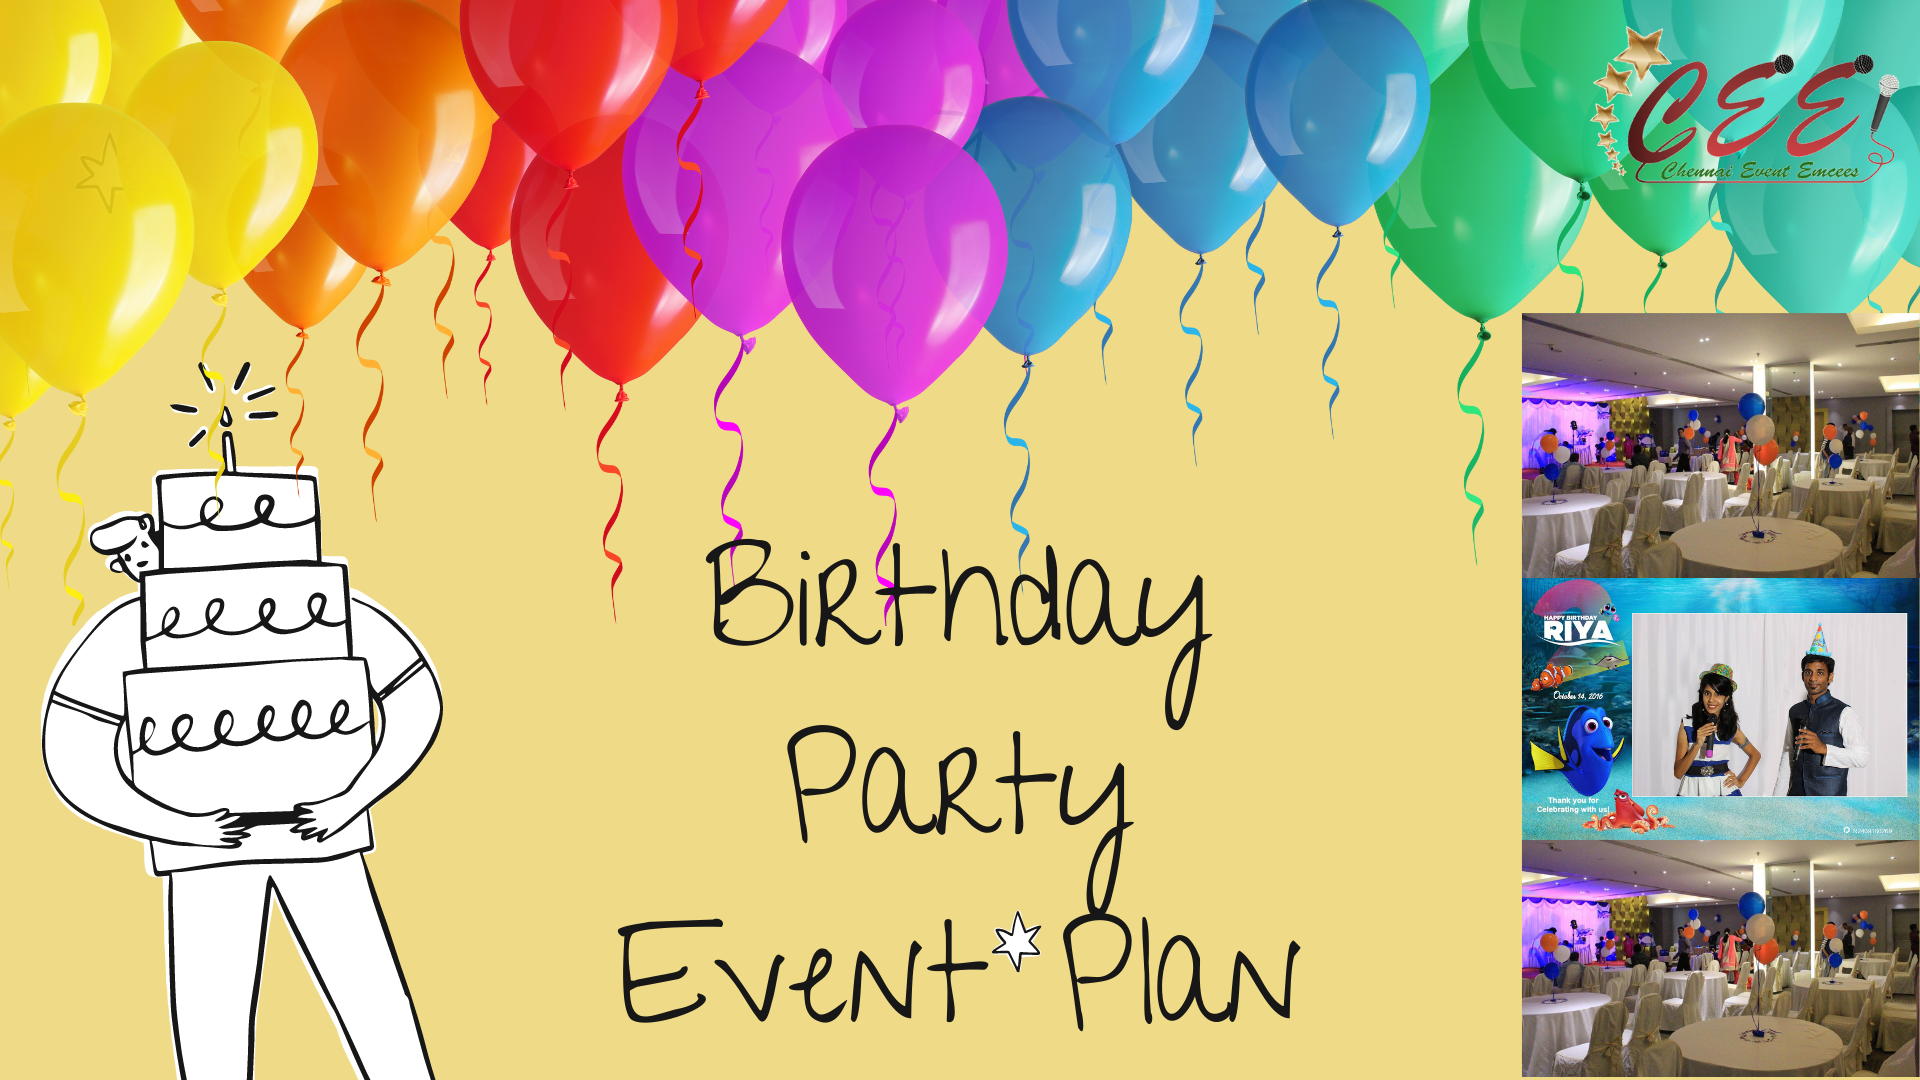 Event Plan for Birthday Party by Chennai Male Emcee Thamizharasan Karunakaran